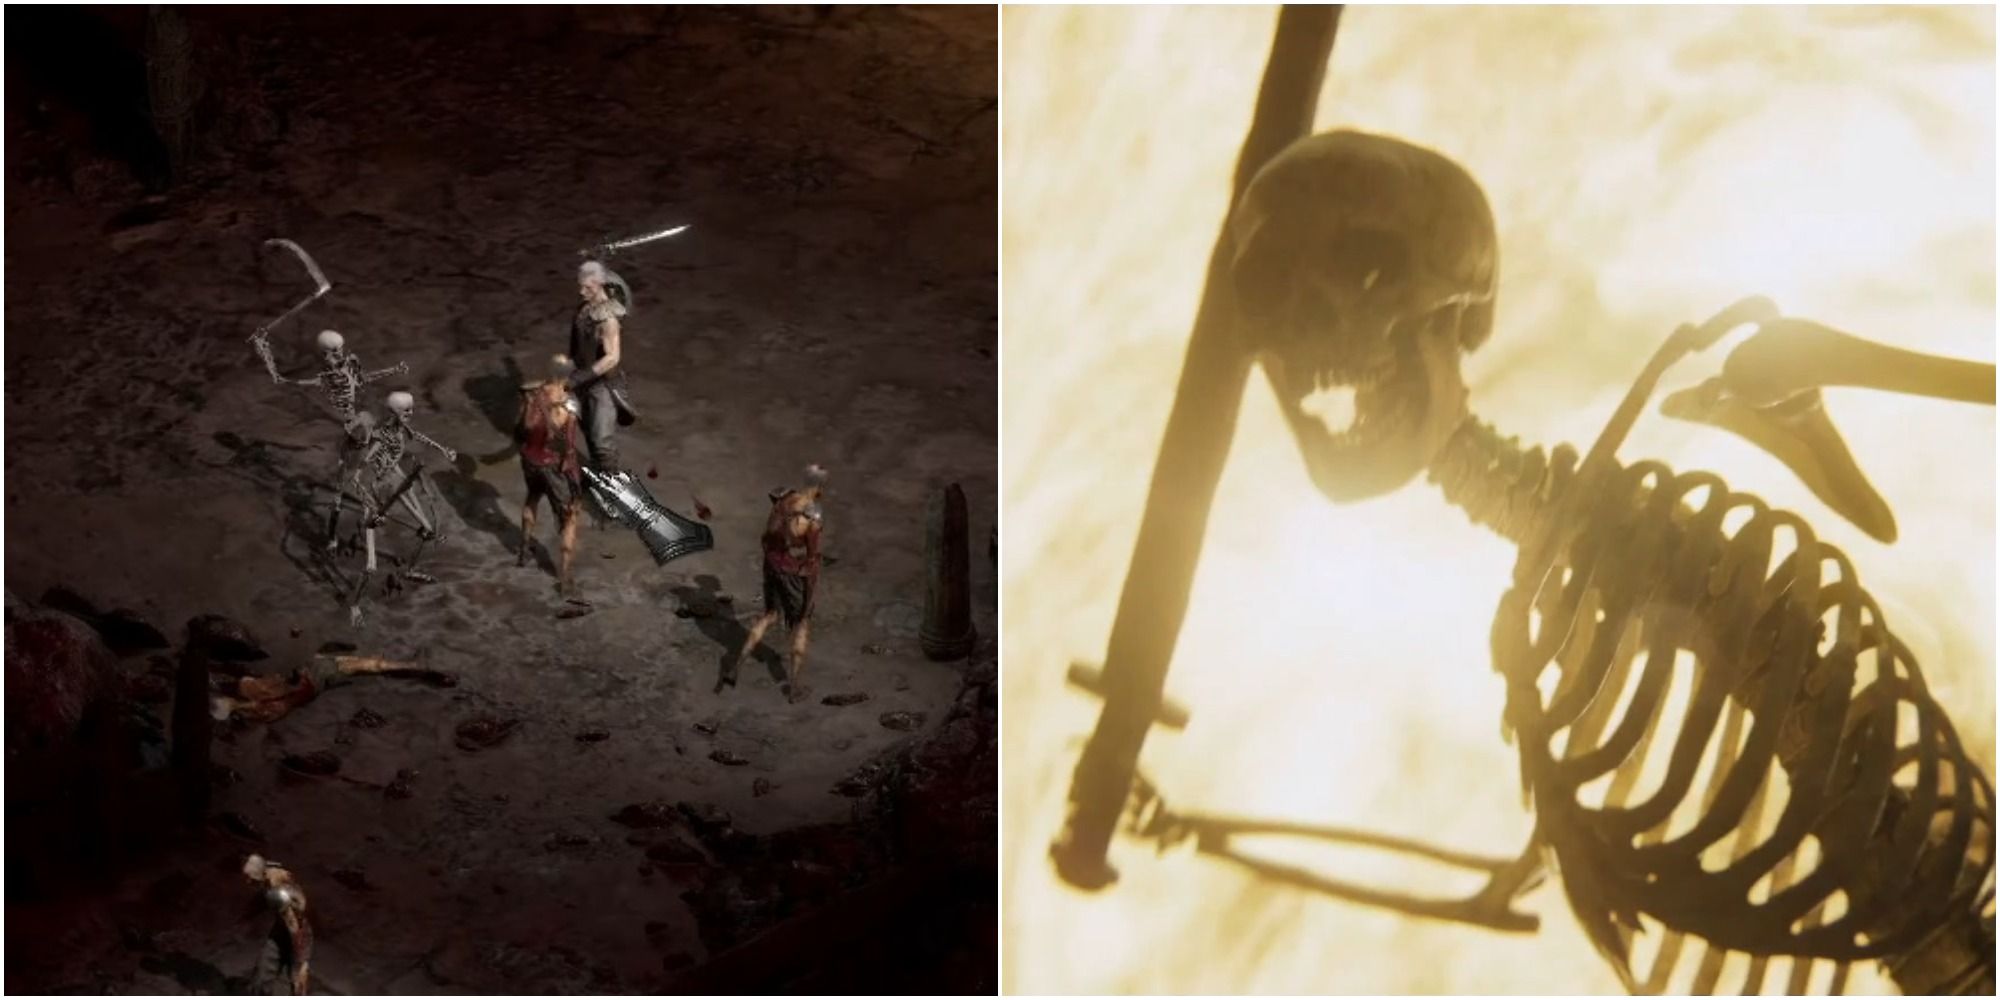 Diablo 2 Summoner Necromancer Build Collage Fighting And Skeleton In Cinematic